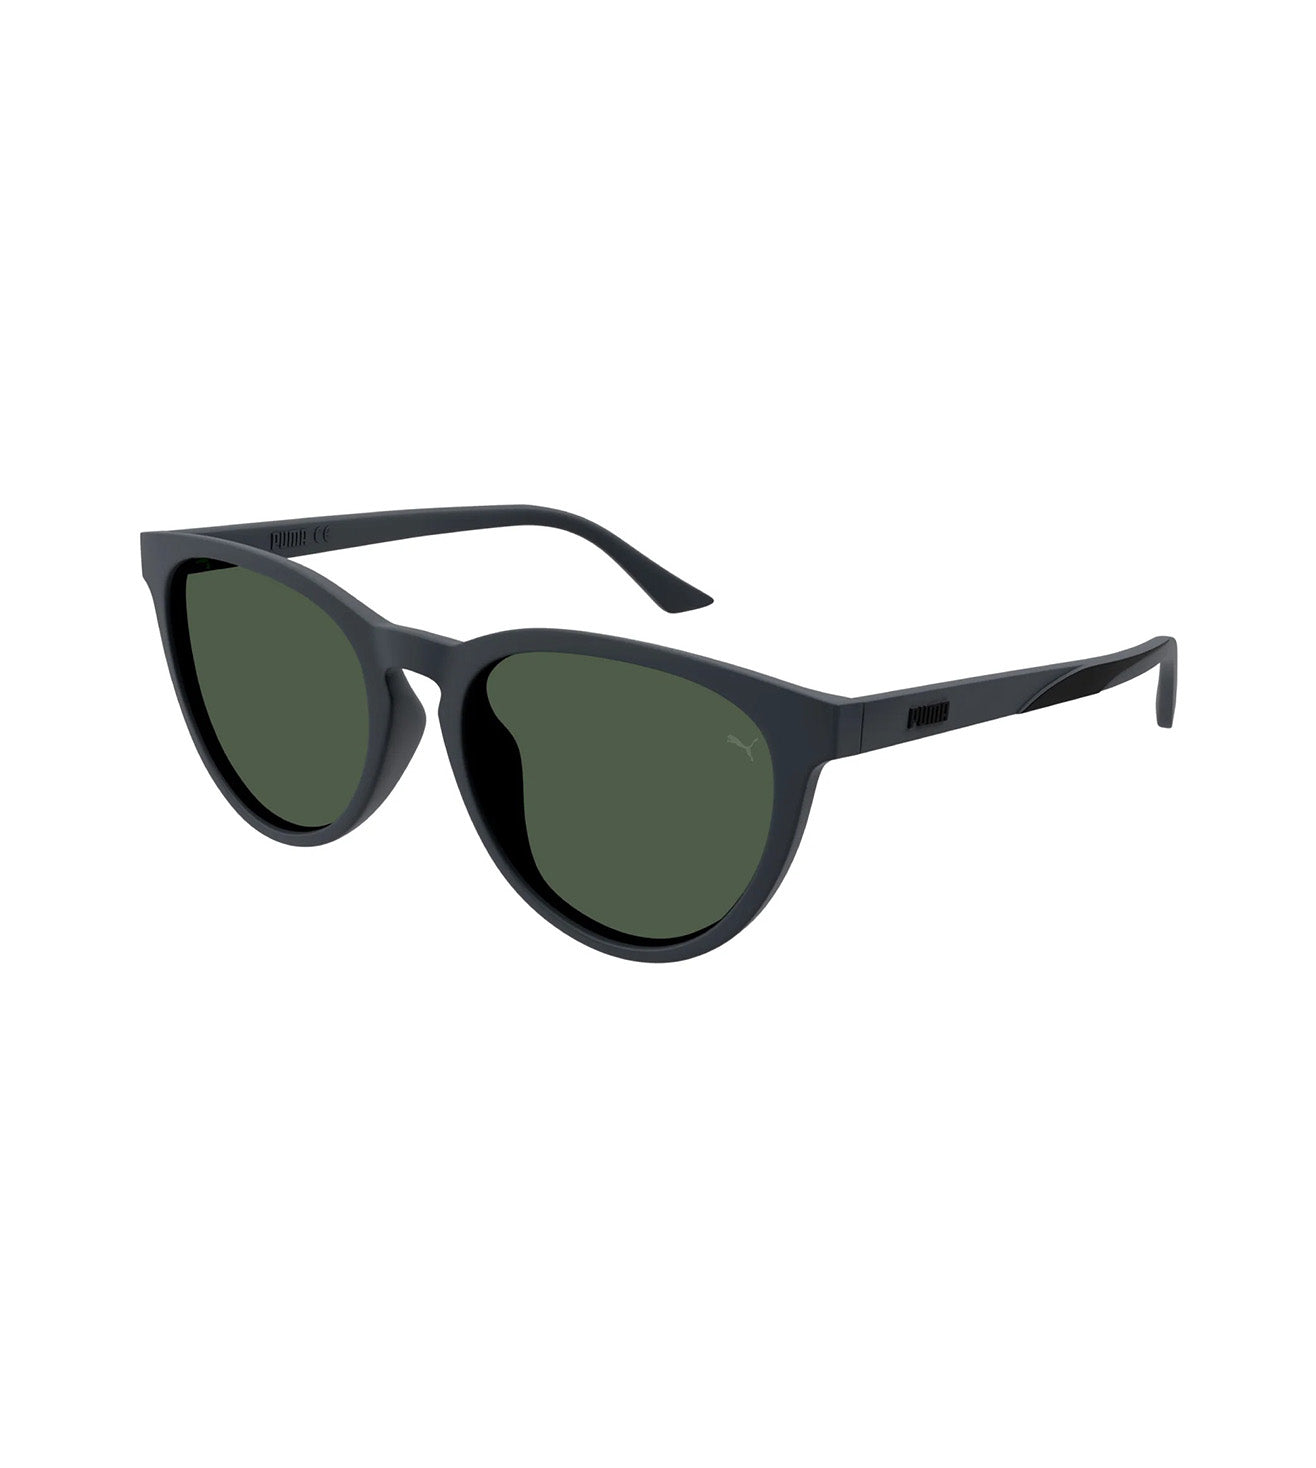 Puma Unisex Green Round Sunglasses